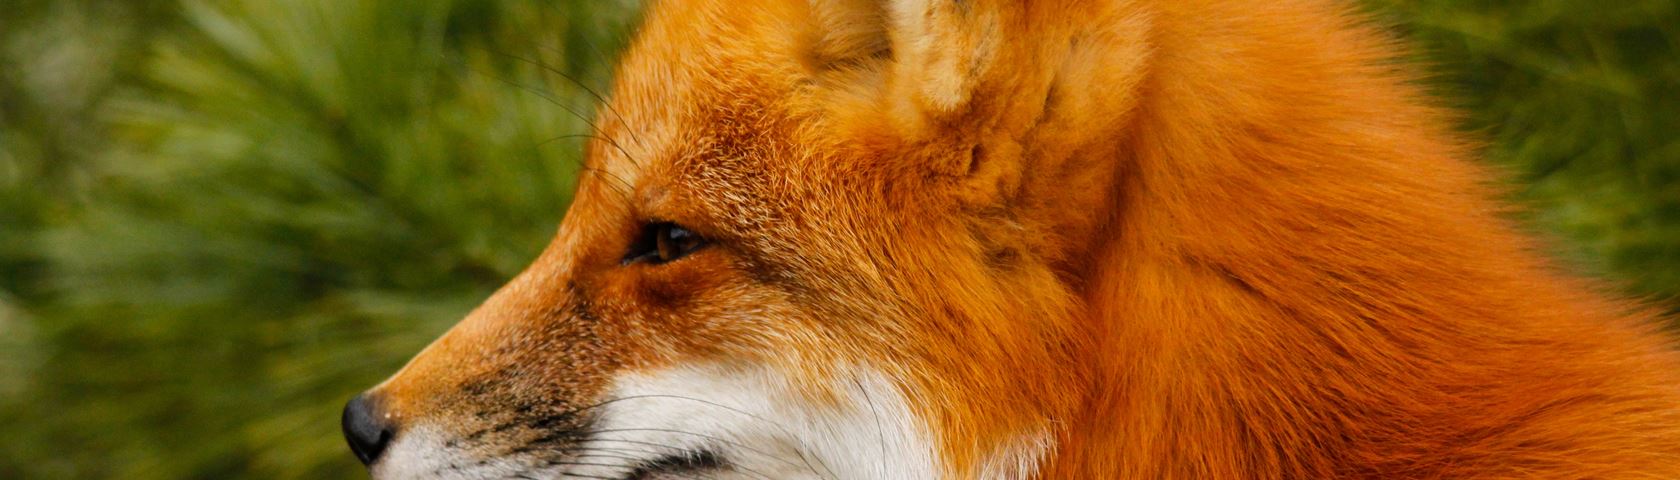 Foxy Looking Profile